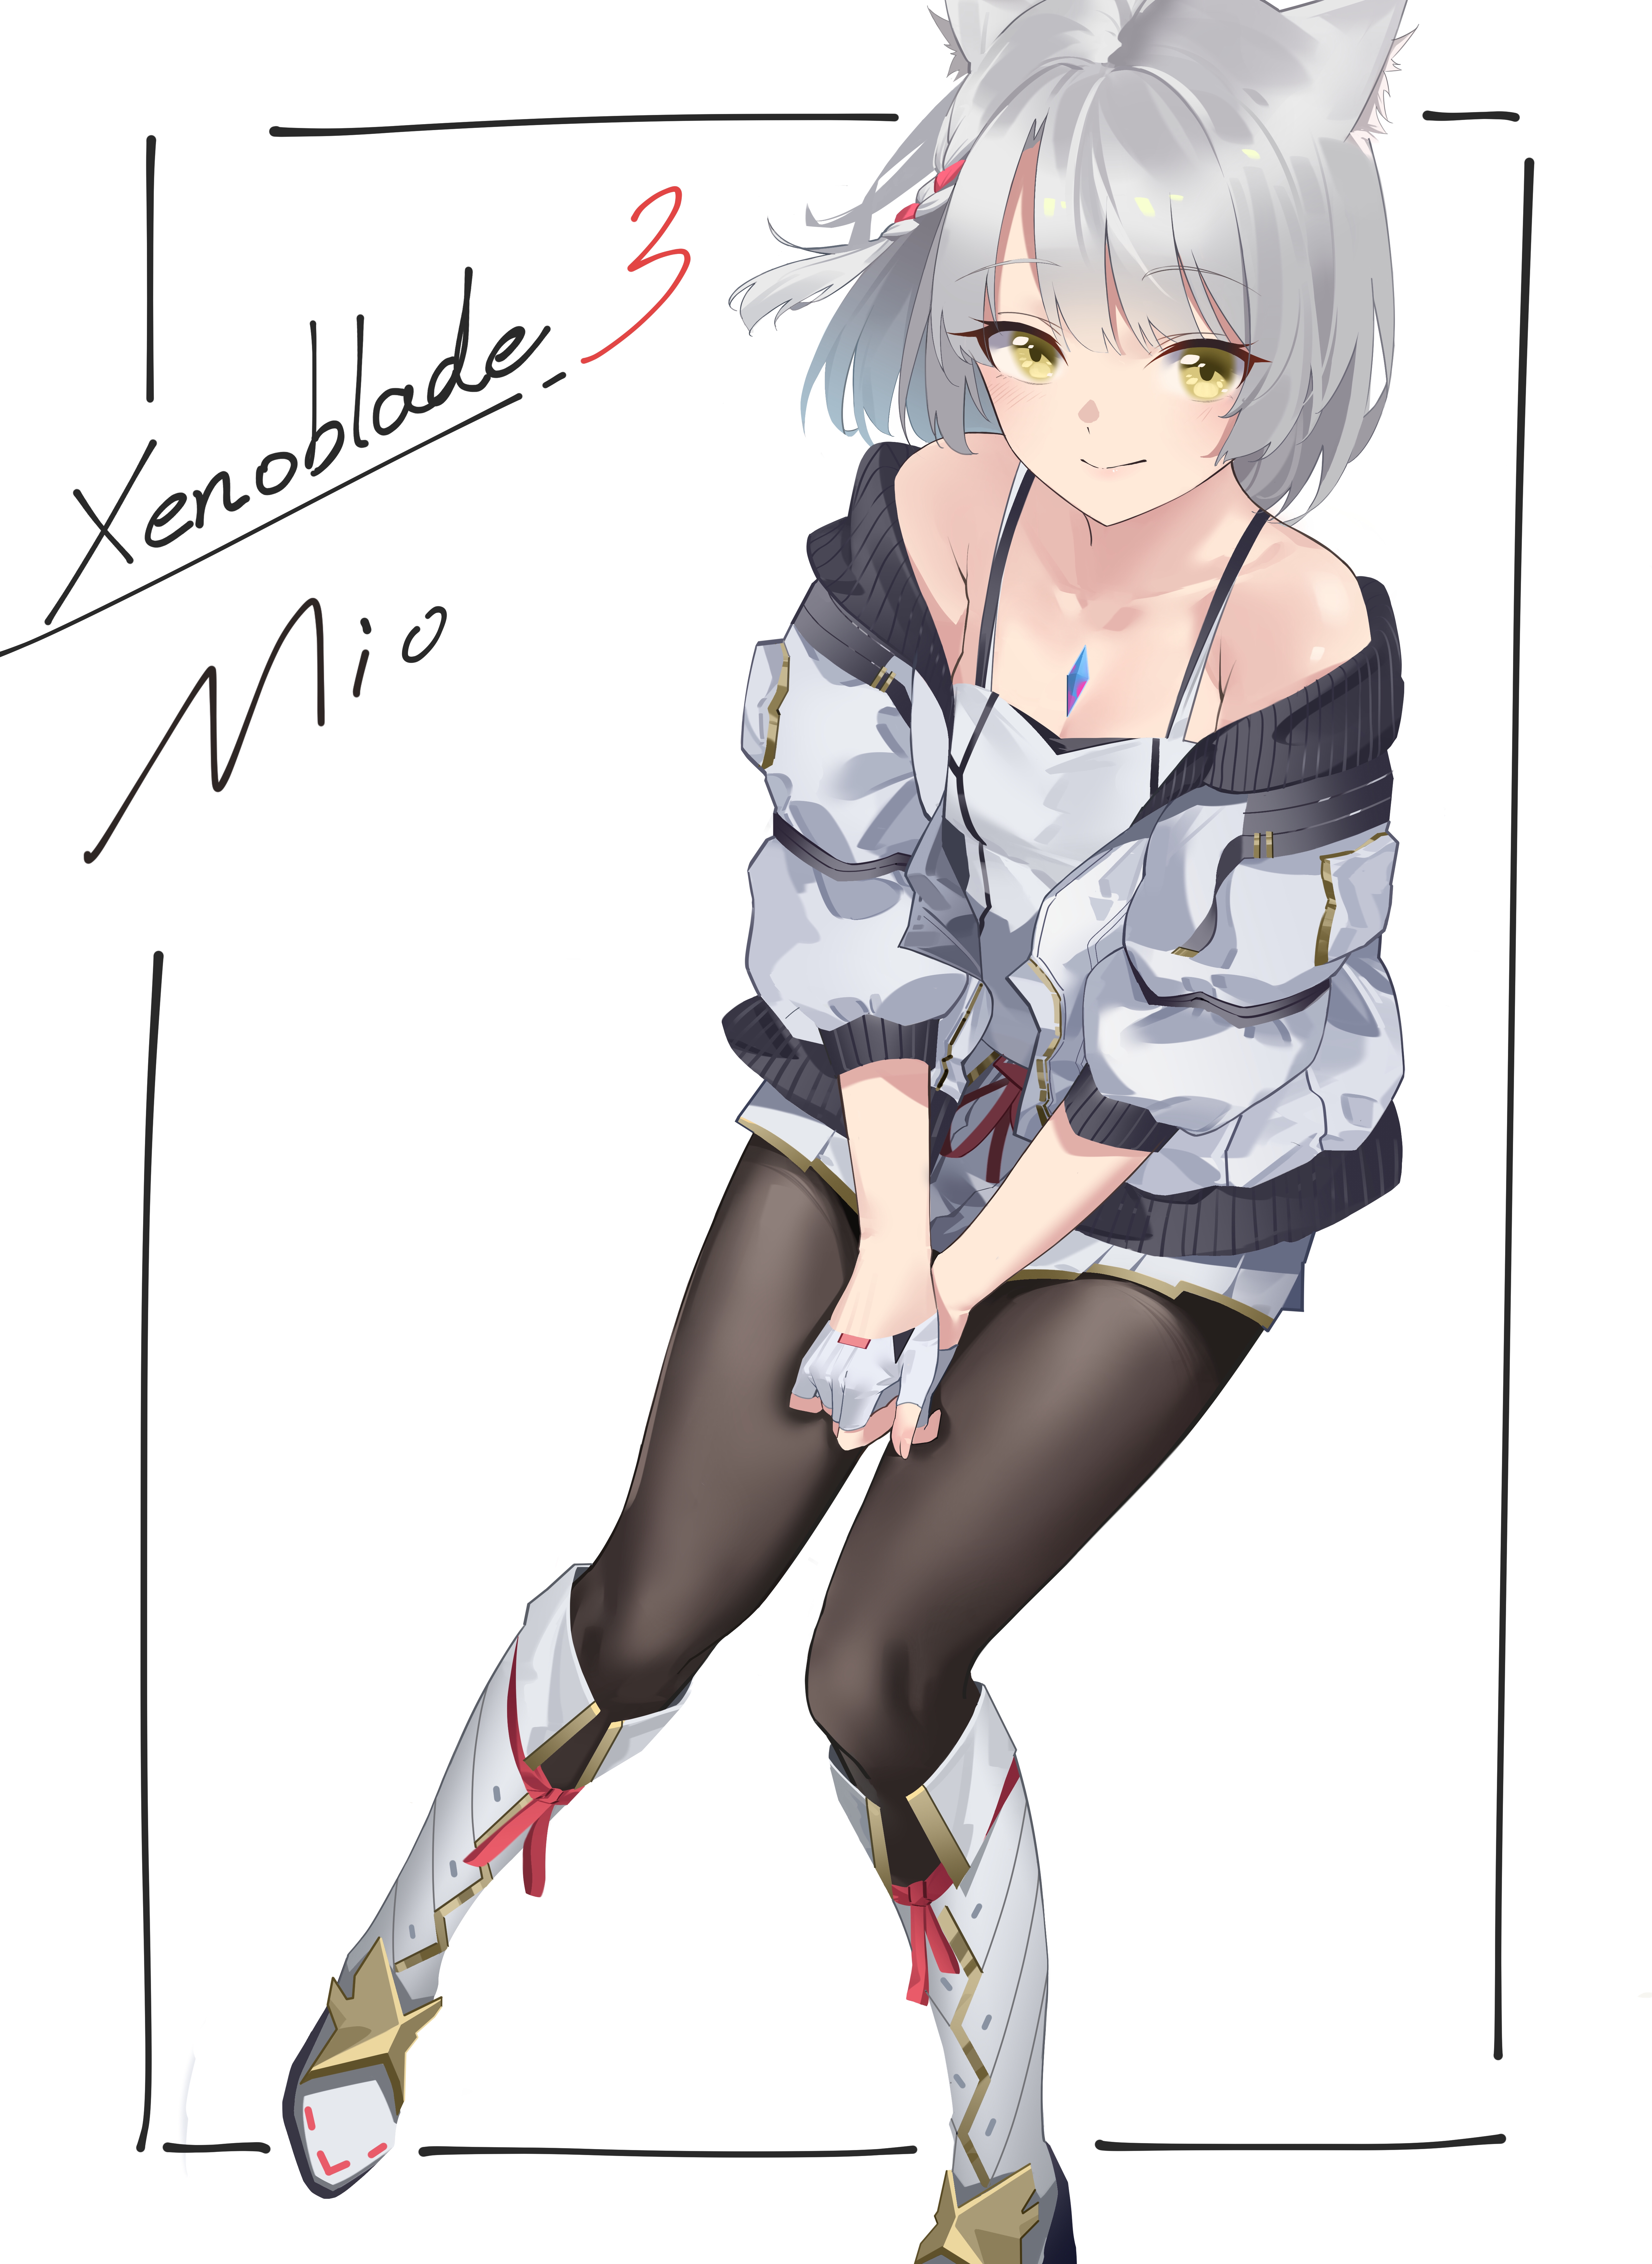 Xenoblade Chronicles 3 Mio Xenoblade 3 Cat Girl Video Games Anime Games Video Game Girls Smiling Whi 5219x7151